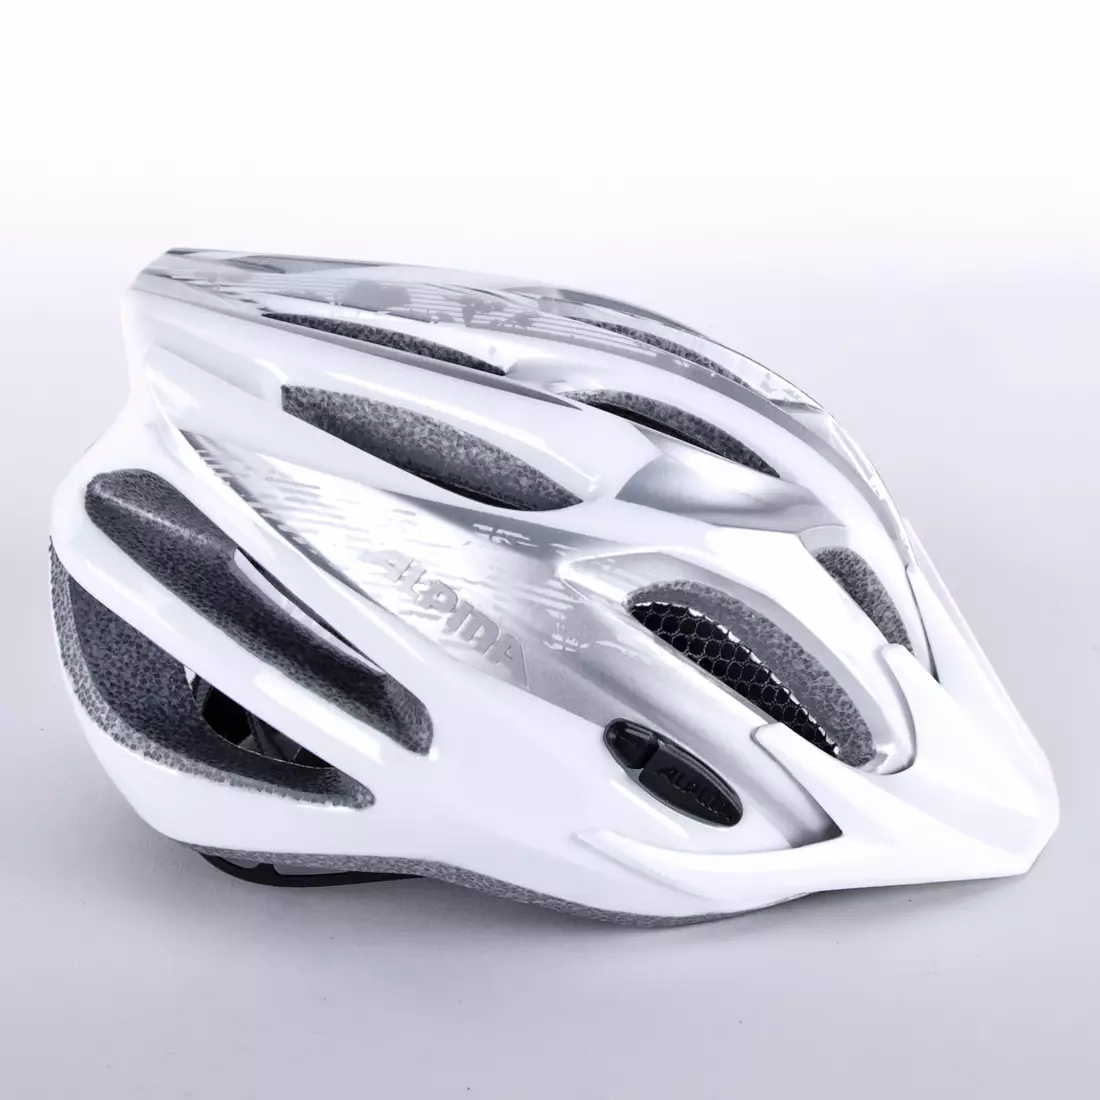 Cyklistická přilba ALPINA TOUR 2.0 stříbrná a bílá